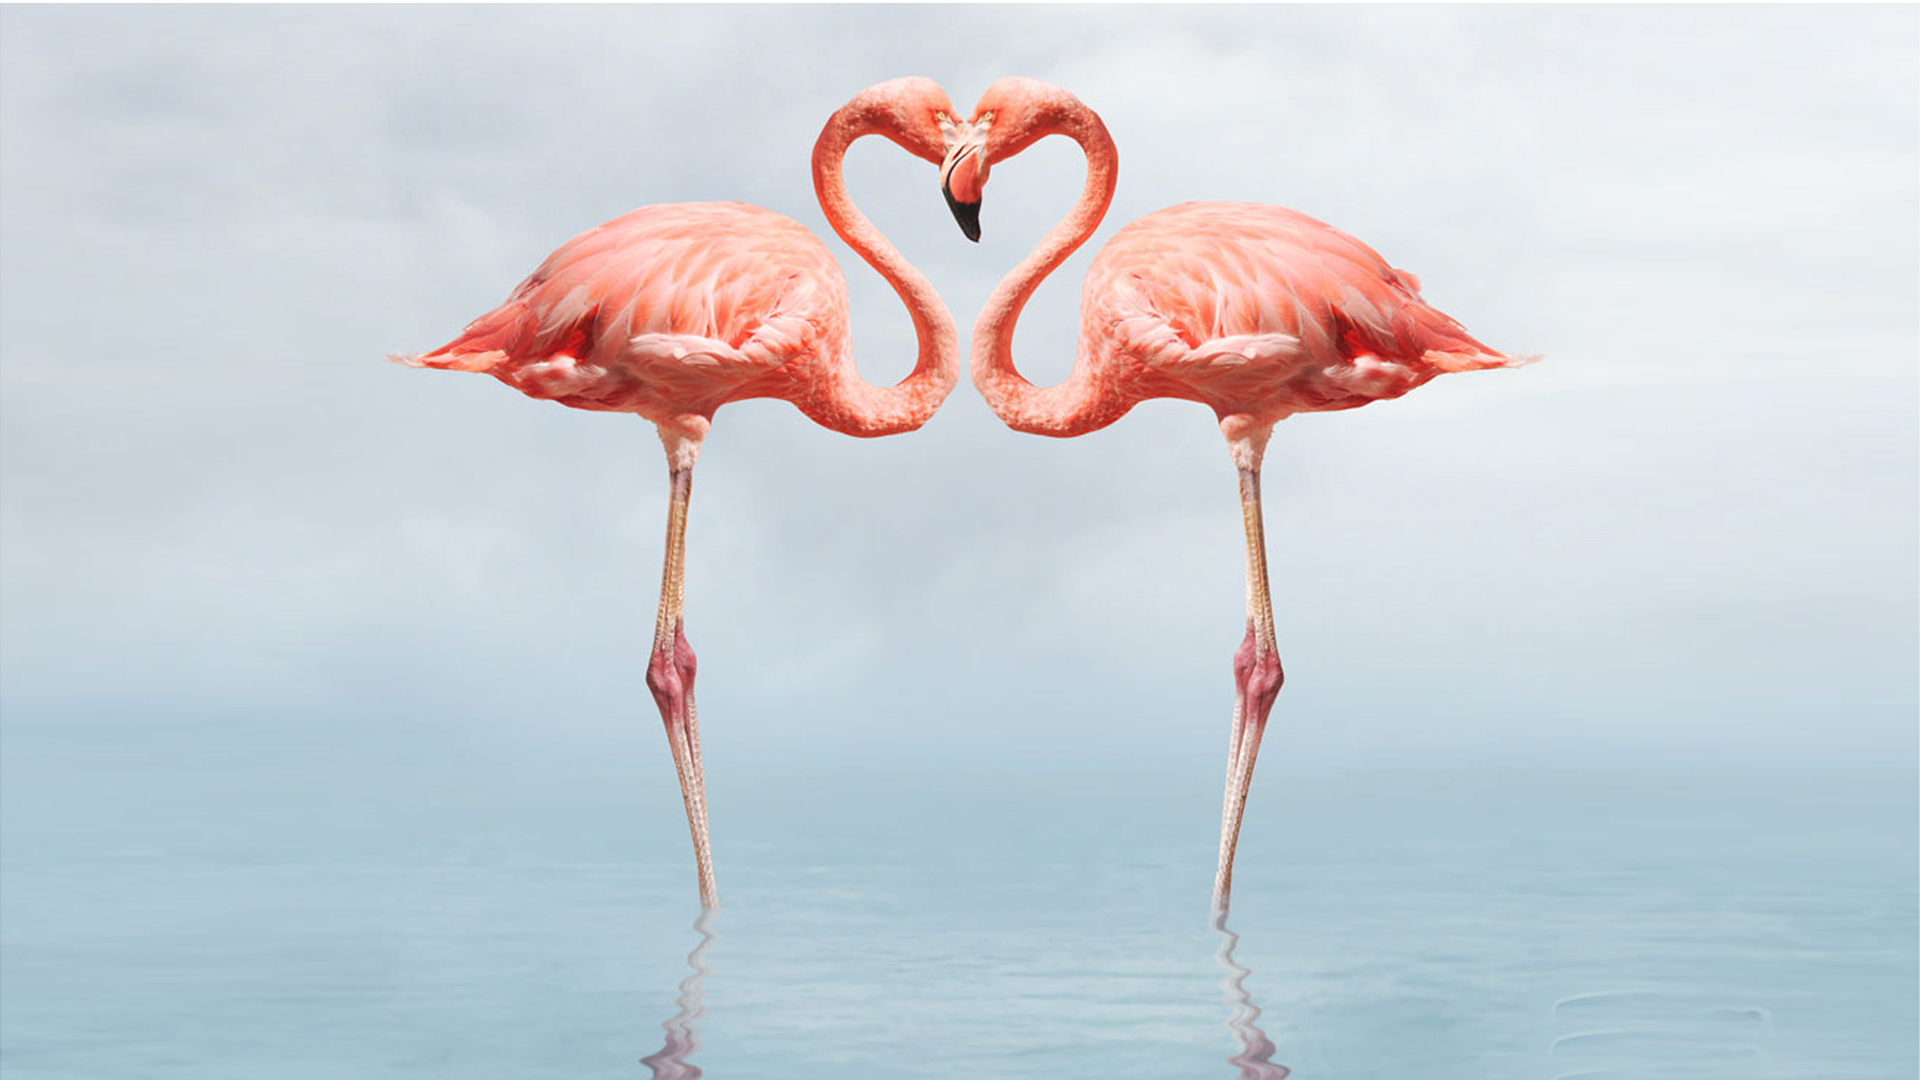 Flamingo Full Hd Wallpapers 1080p Wallpapers13 Com